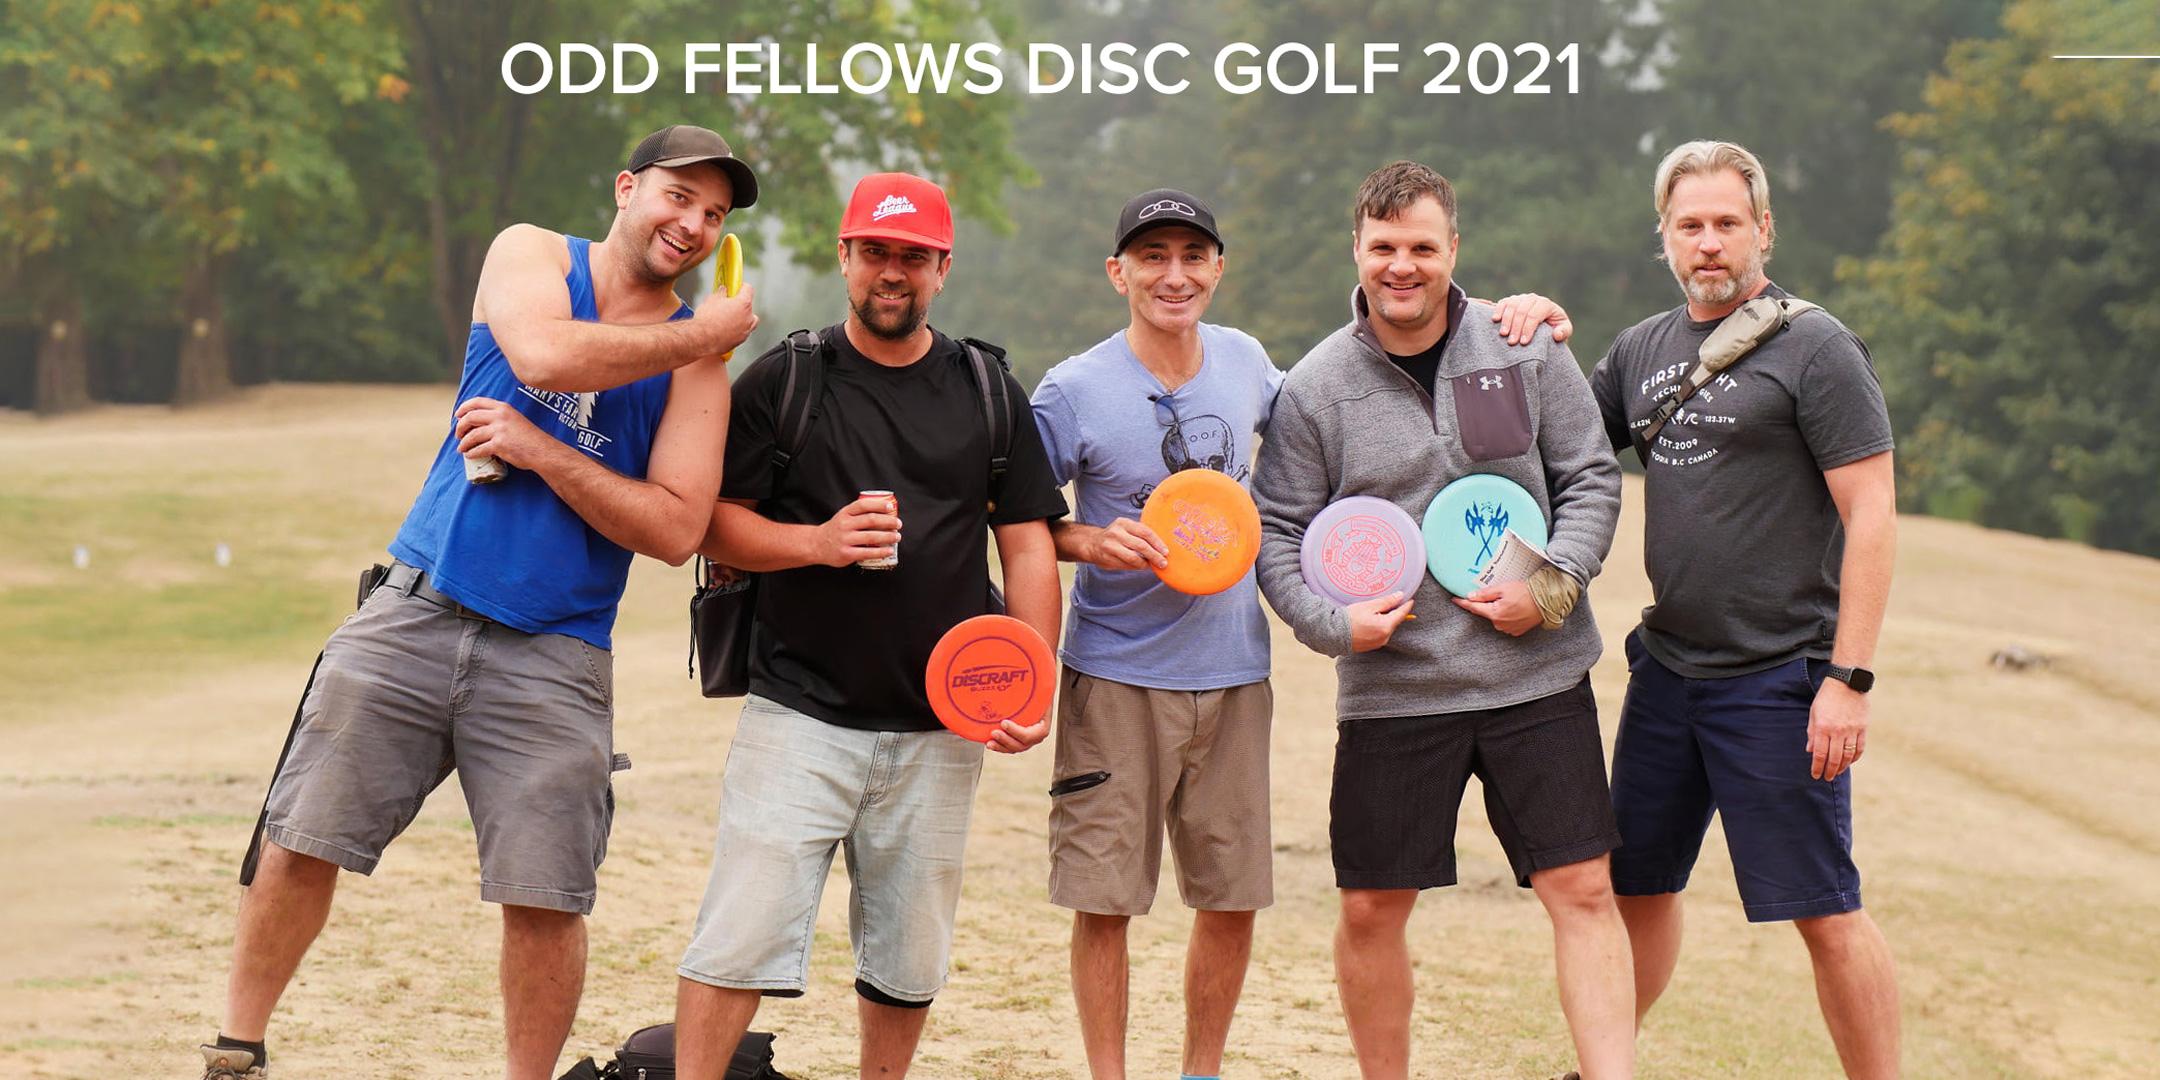 5th Annual Charity Odd Fellows Disc Golf Jamboree September 11, 2021